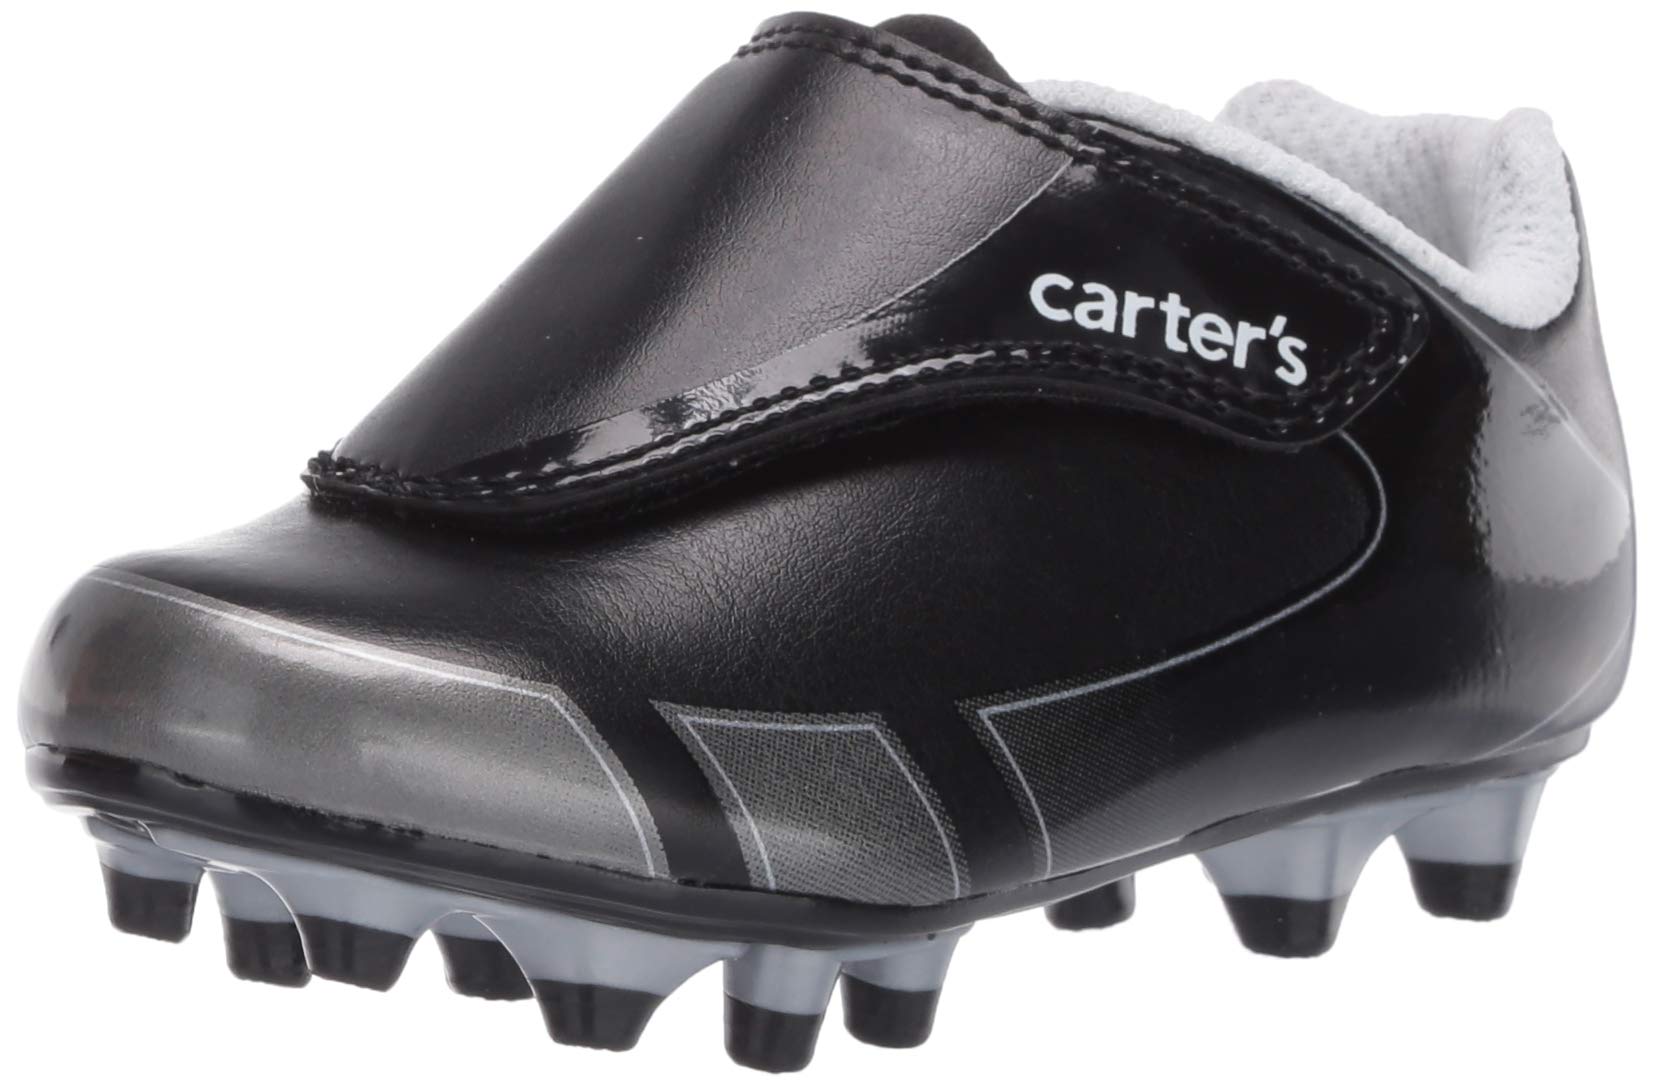 Carter's Unisex-Child Fica Sport Cleat